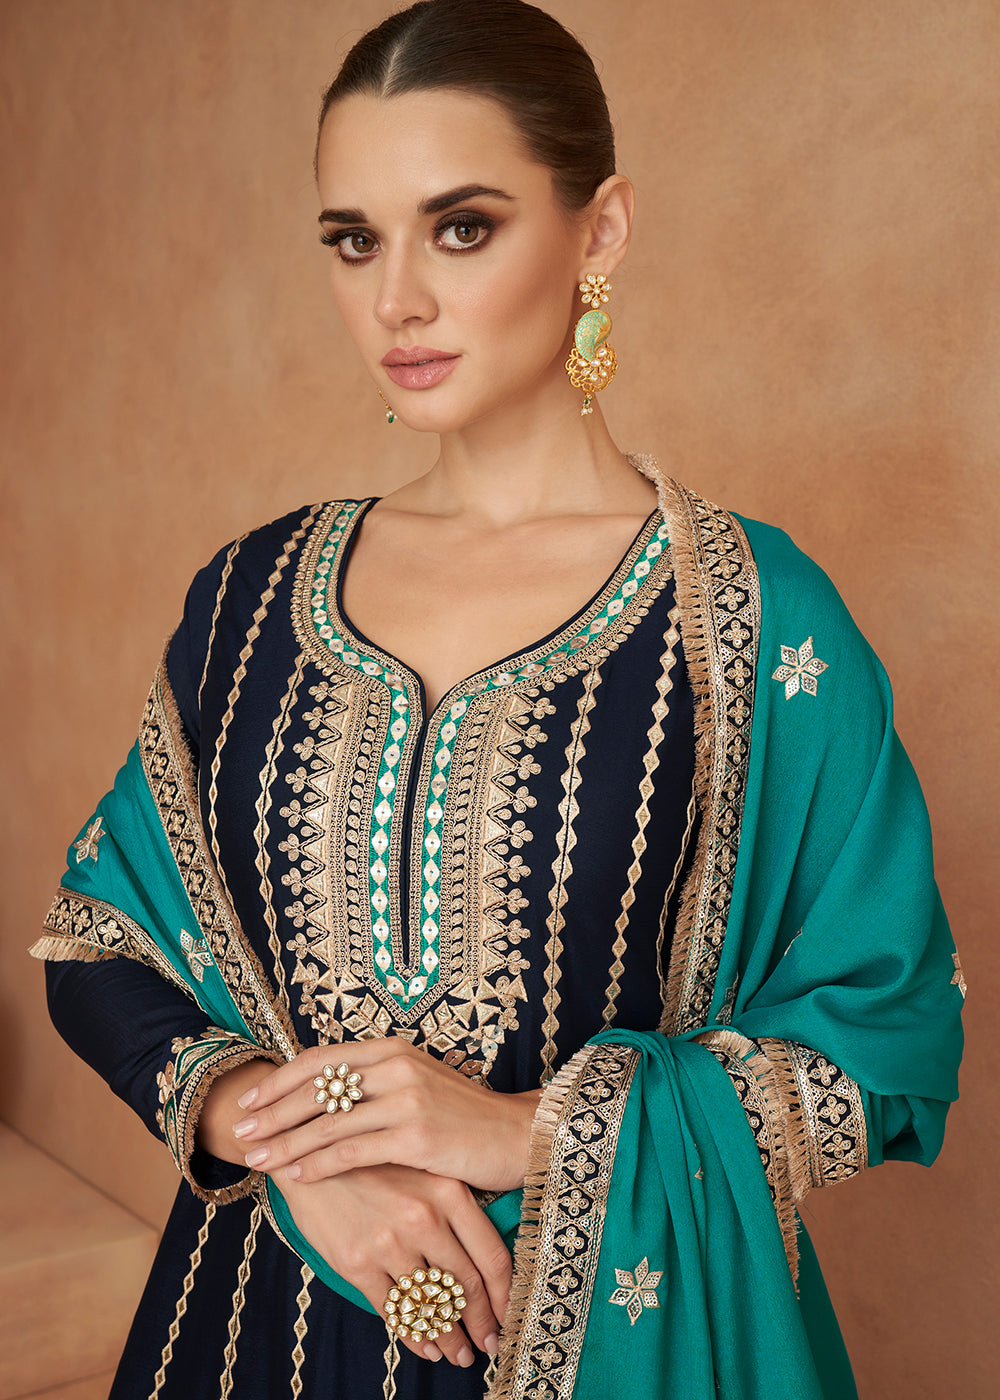 Buy Now Premium Chinnon Dark Blue Punjabi Style Salwar Suit Online in USA, UK, Canada, Germany, Australia & Worldwide at Empress Clothing.